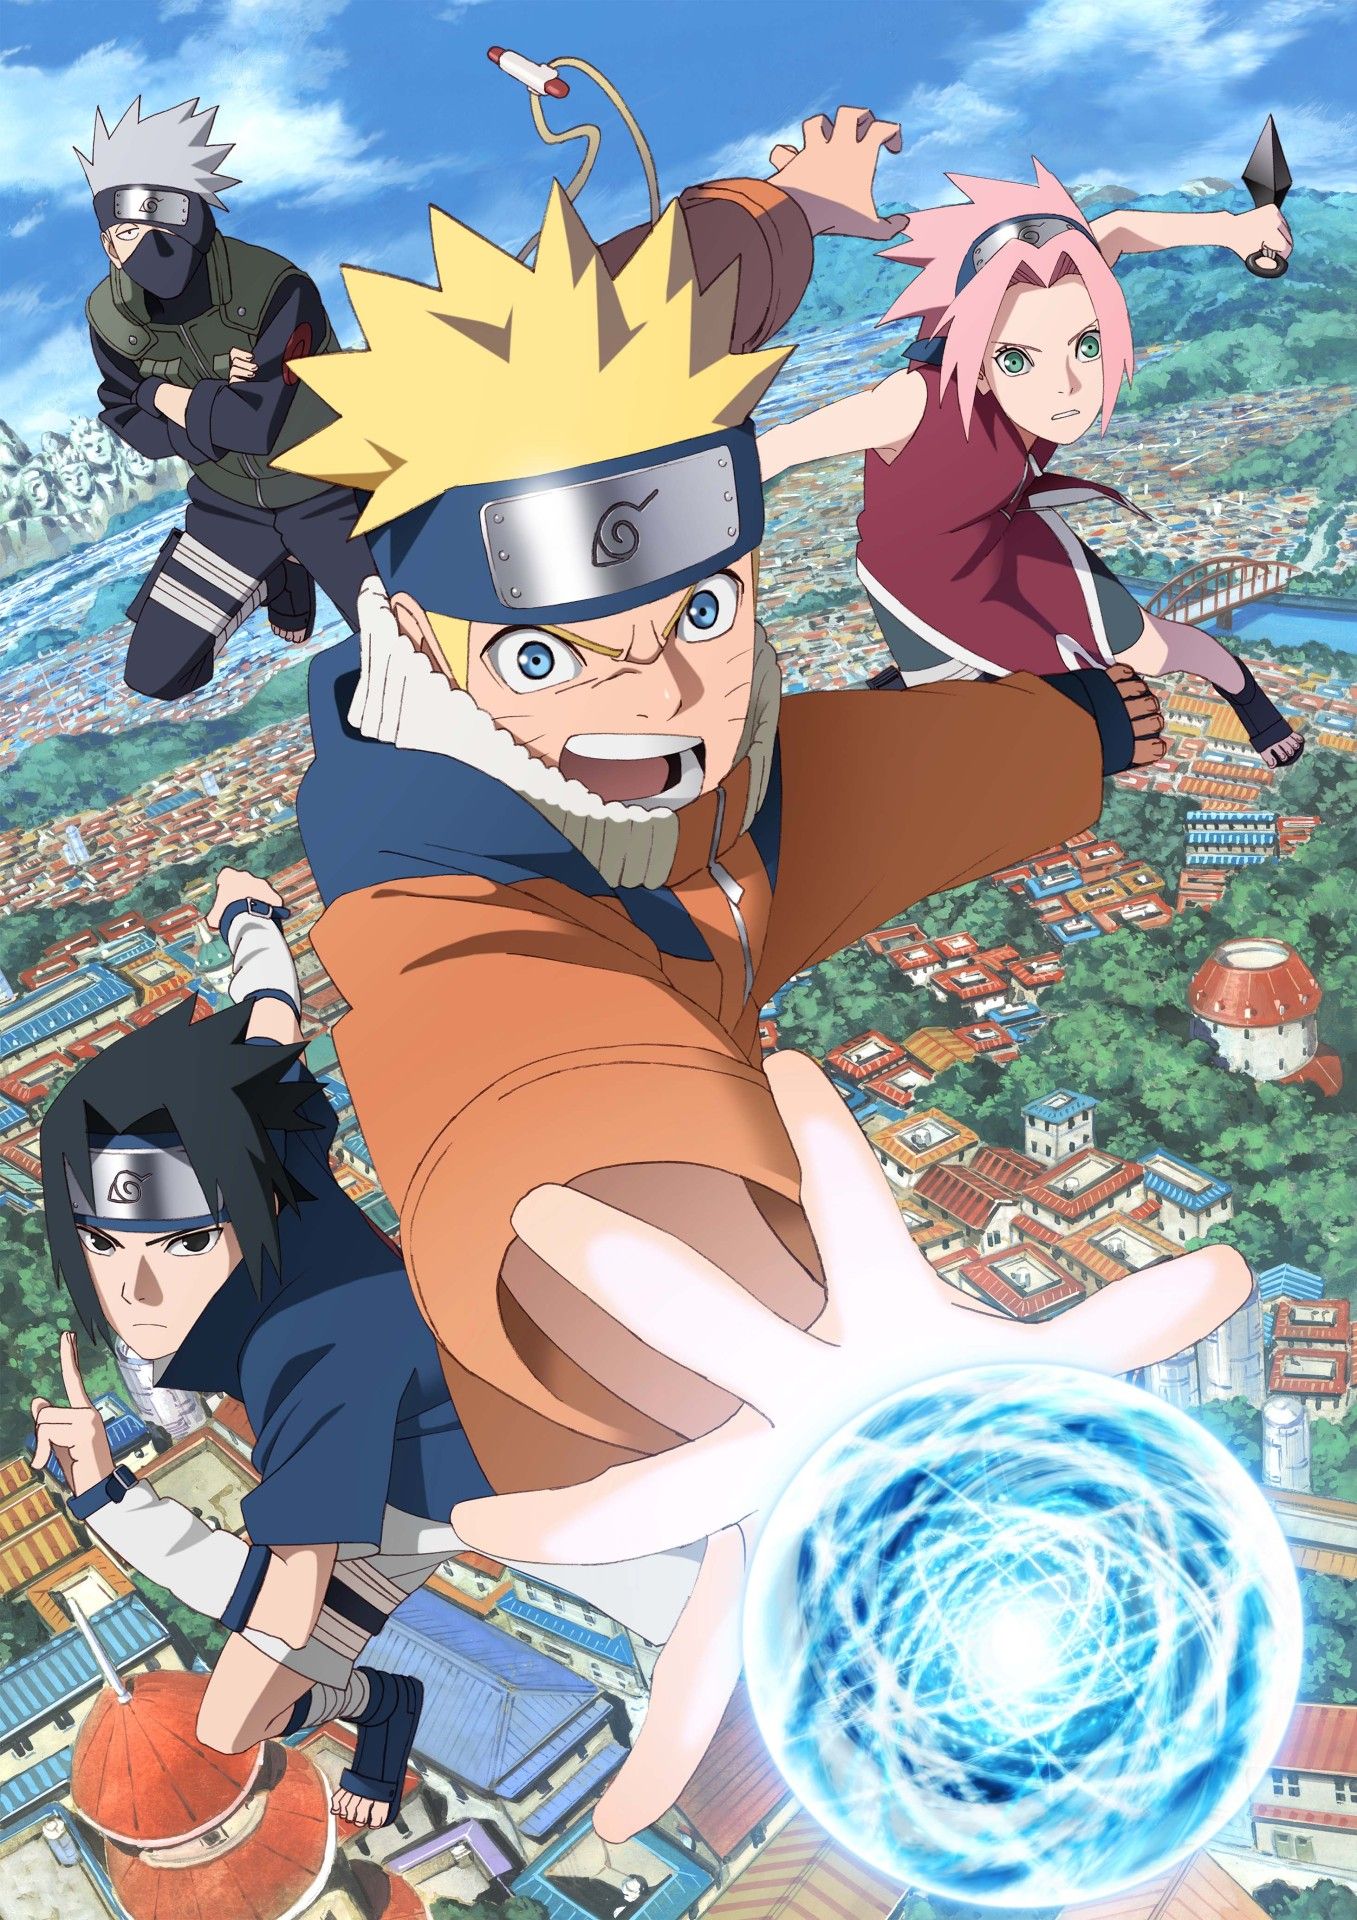 Naruto TV Series 20022007  IMDb